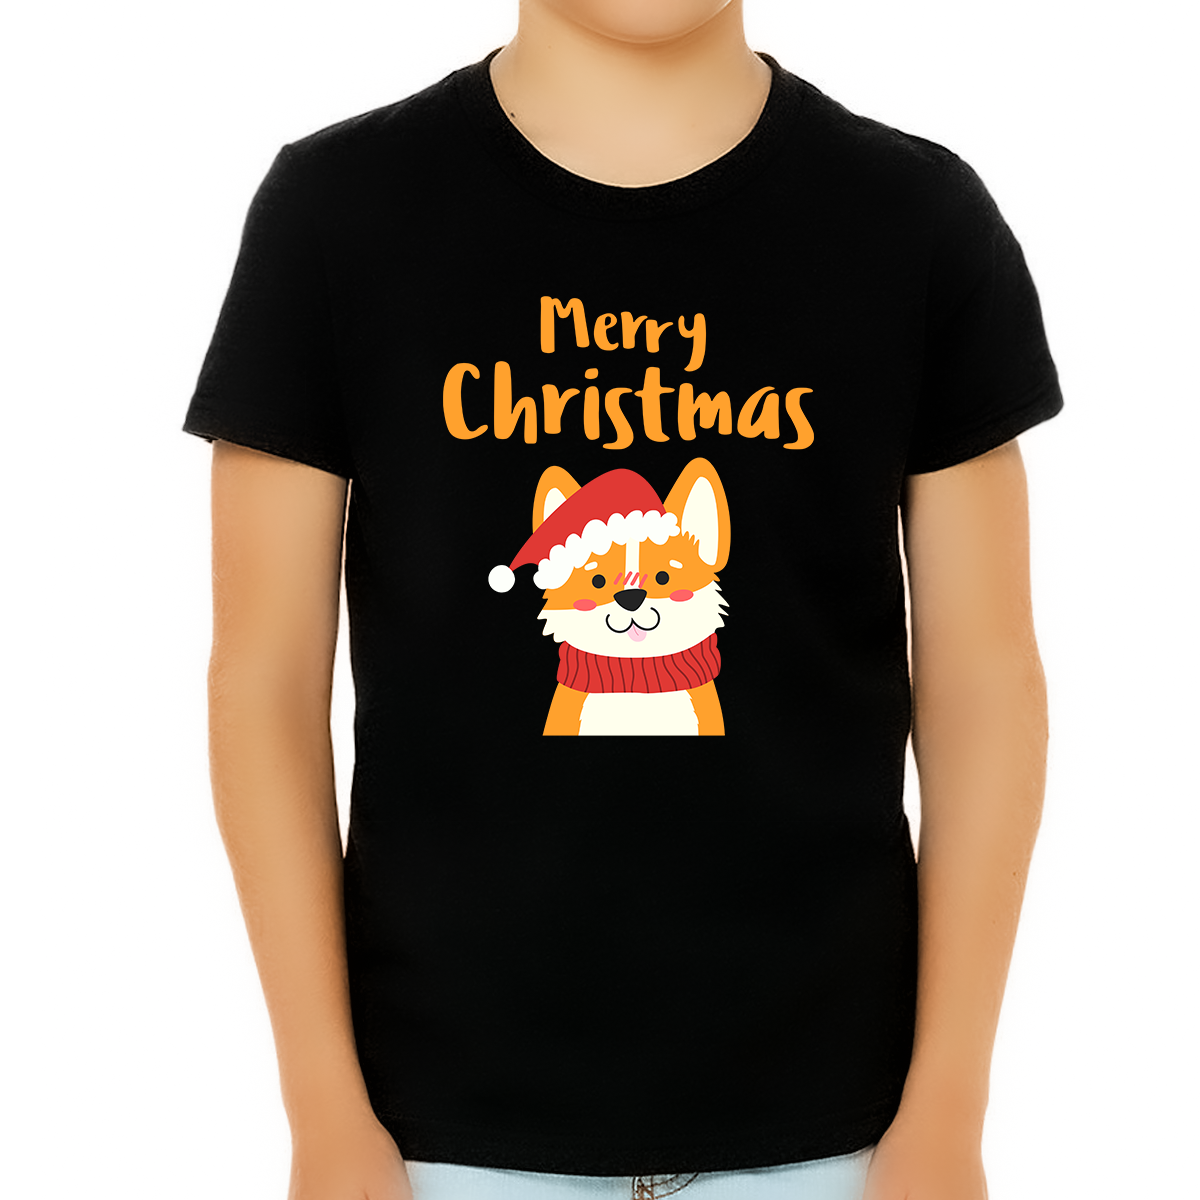 Fire Fit Designs Funny Santa Dog Christmas Shirt Funny Christmas Shirts for Boys Funny Christmas T-Shirt Christmas Gifts